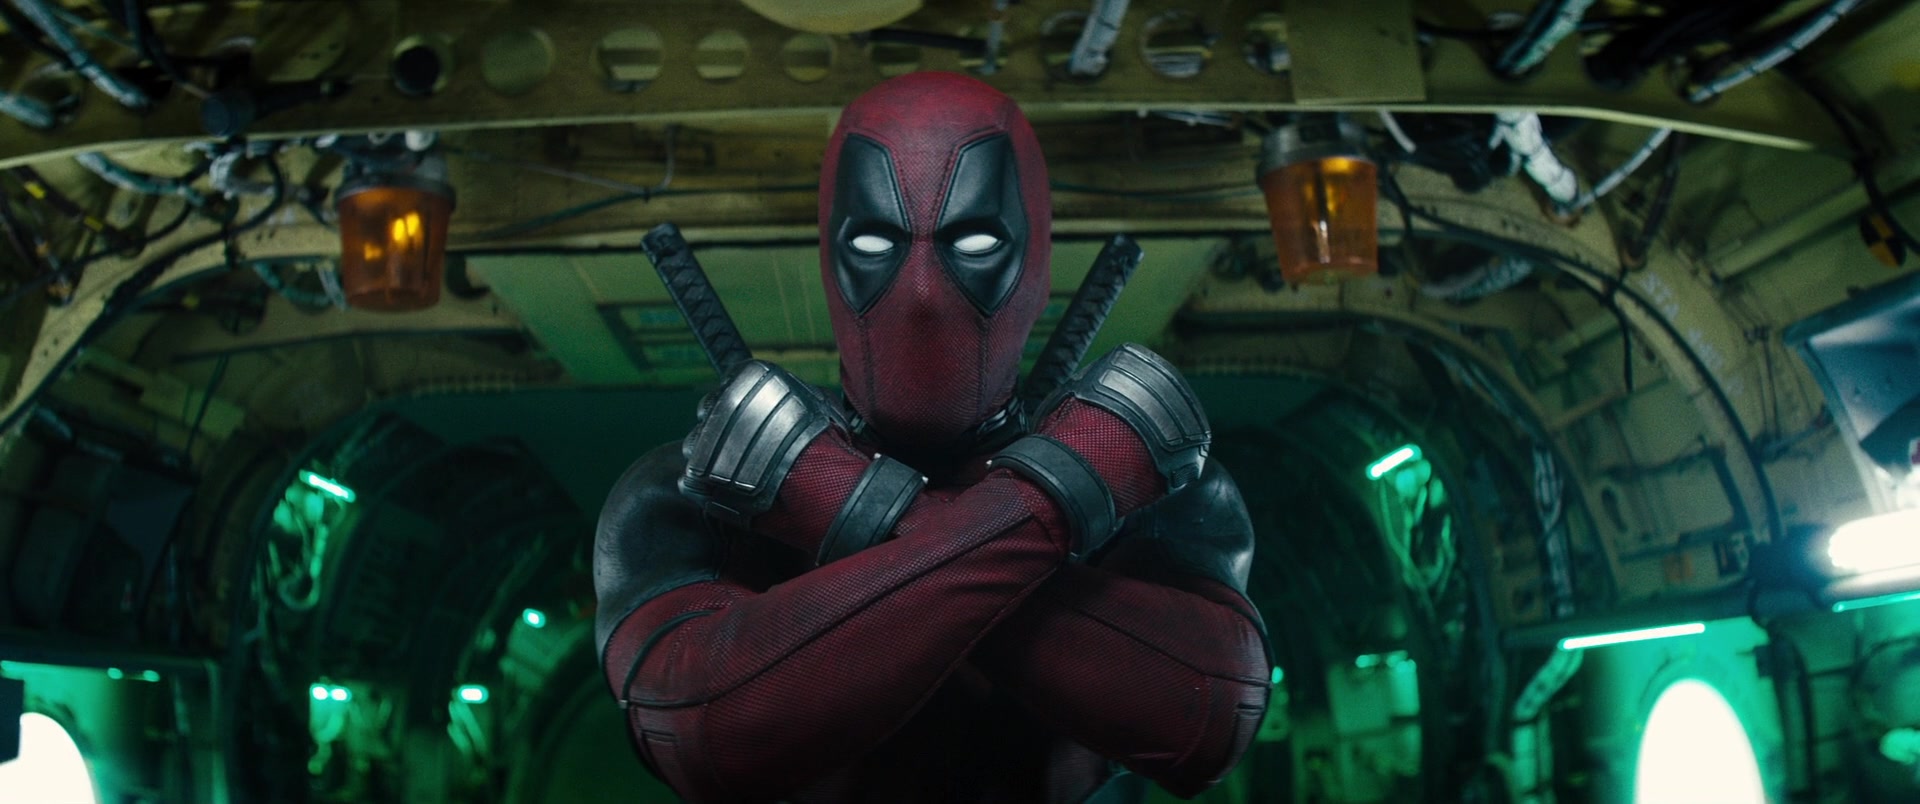 Deadpool (Ryan Reynolds) prepares to deploy X-Force in Deadpool 2 (2016), Marvel Entertainment